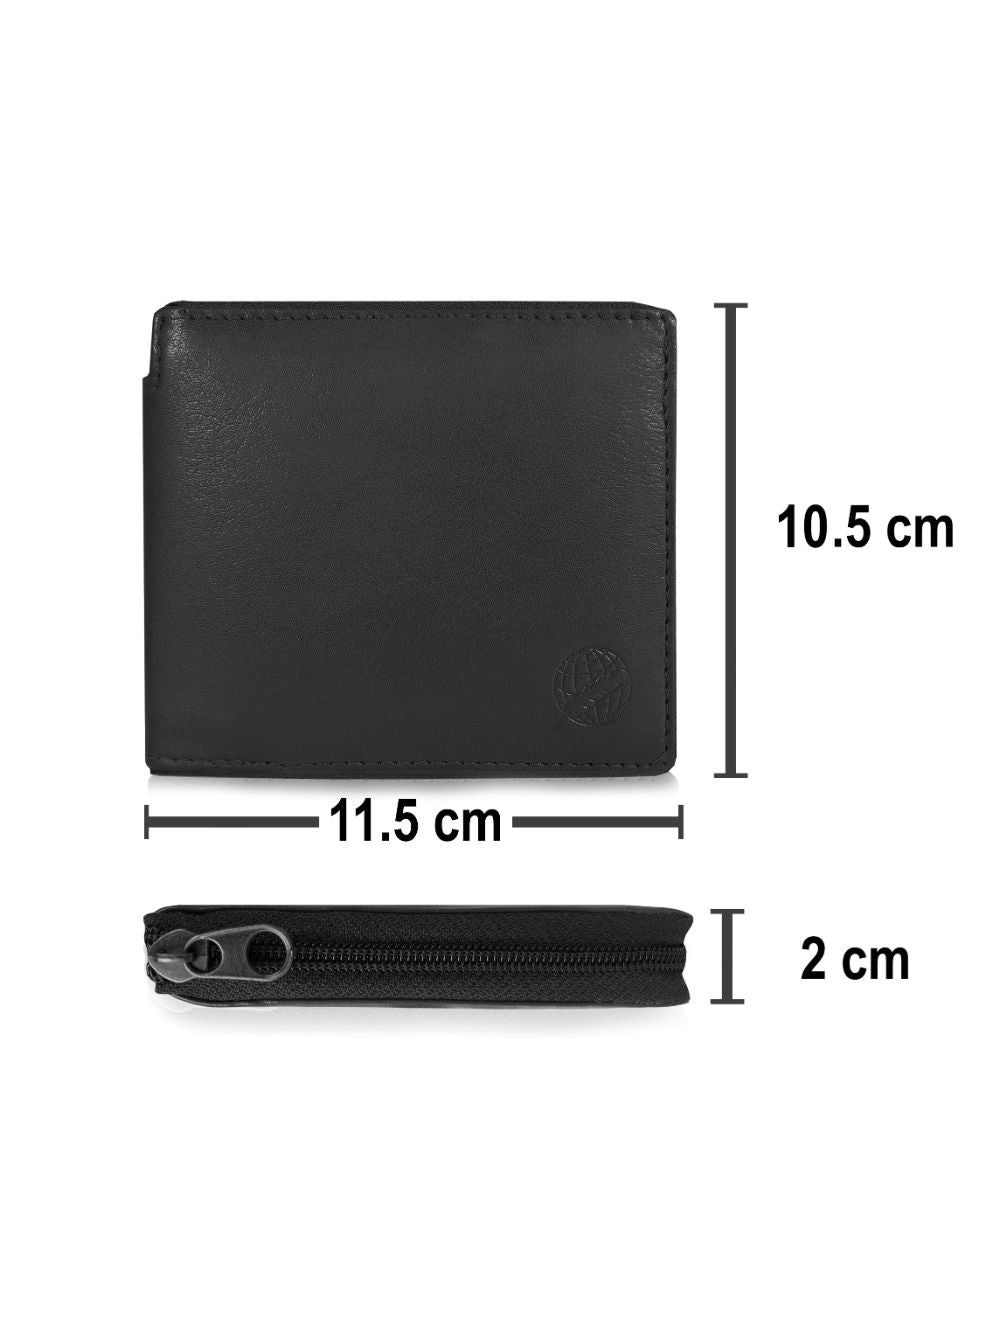 Roamlite Mens Zip-around Black Leather Wallet RL184 measurements 